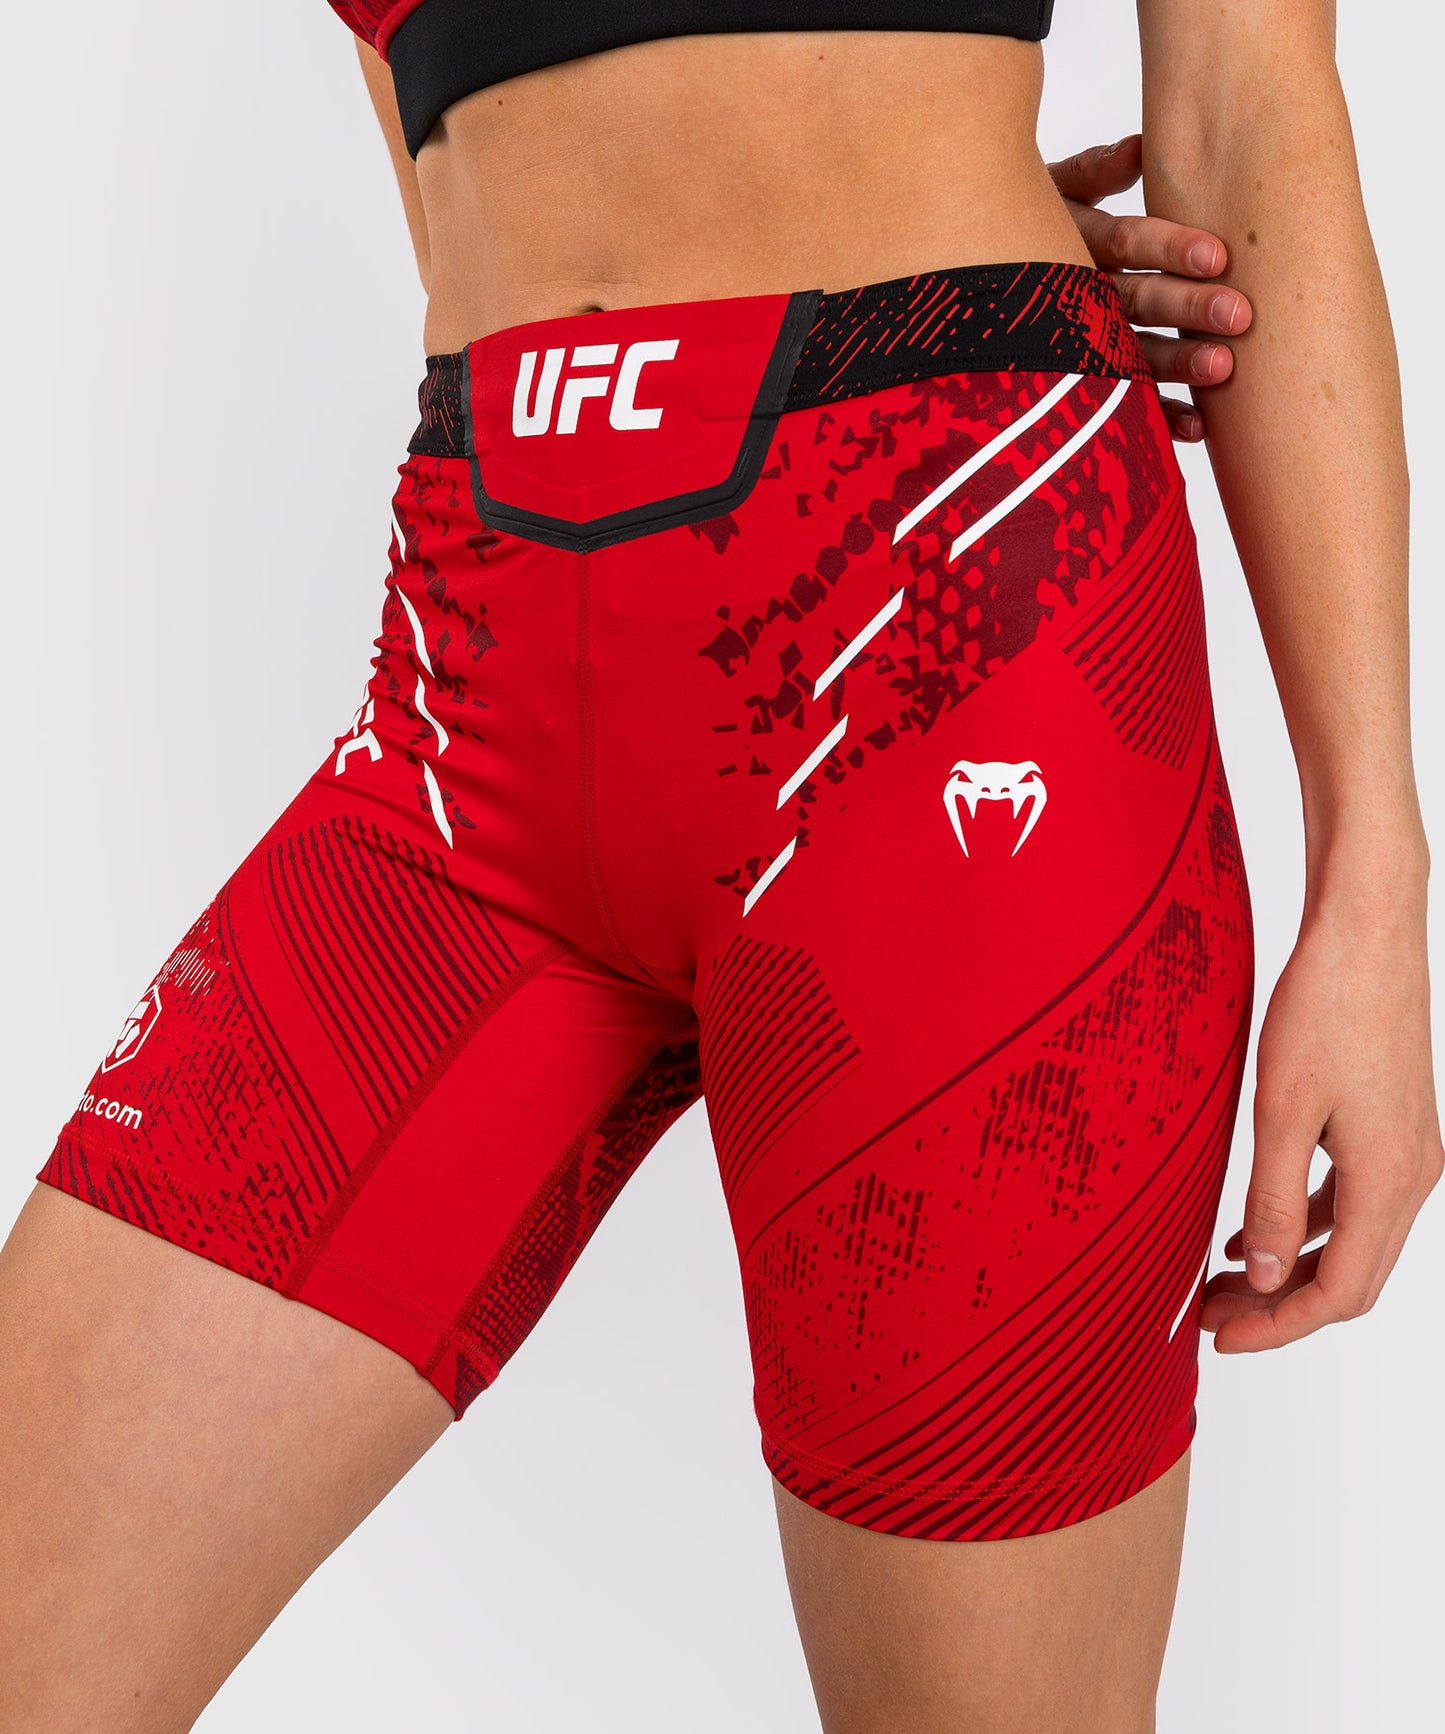 UFC Adrenaline by Venum Authentic Fight Night Women’s Vale Tudo Short - Long Fit - Red